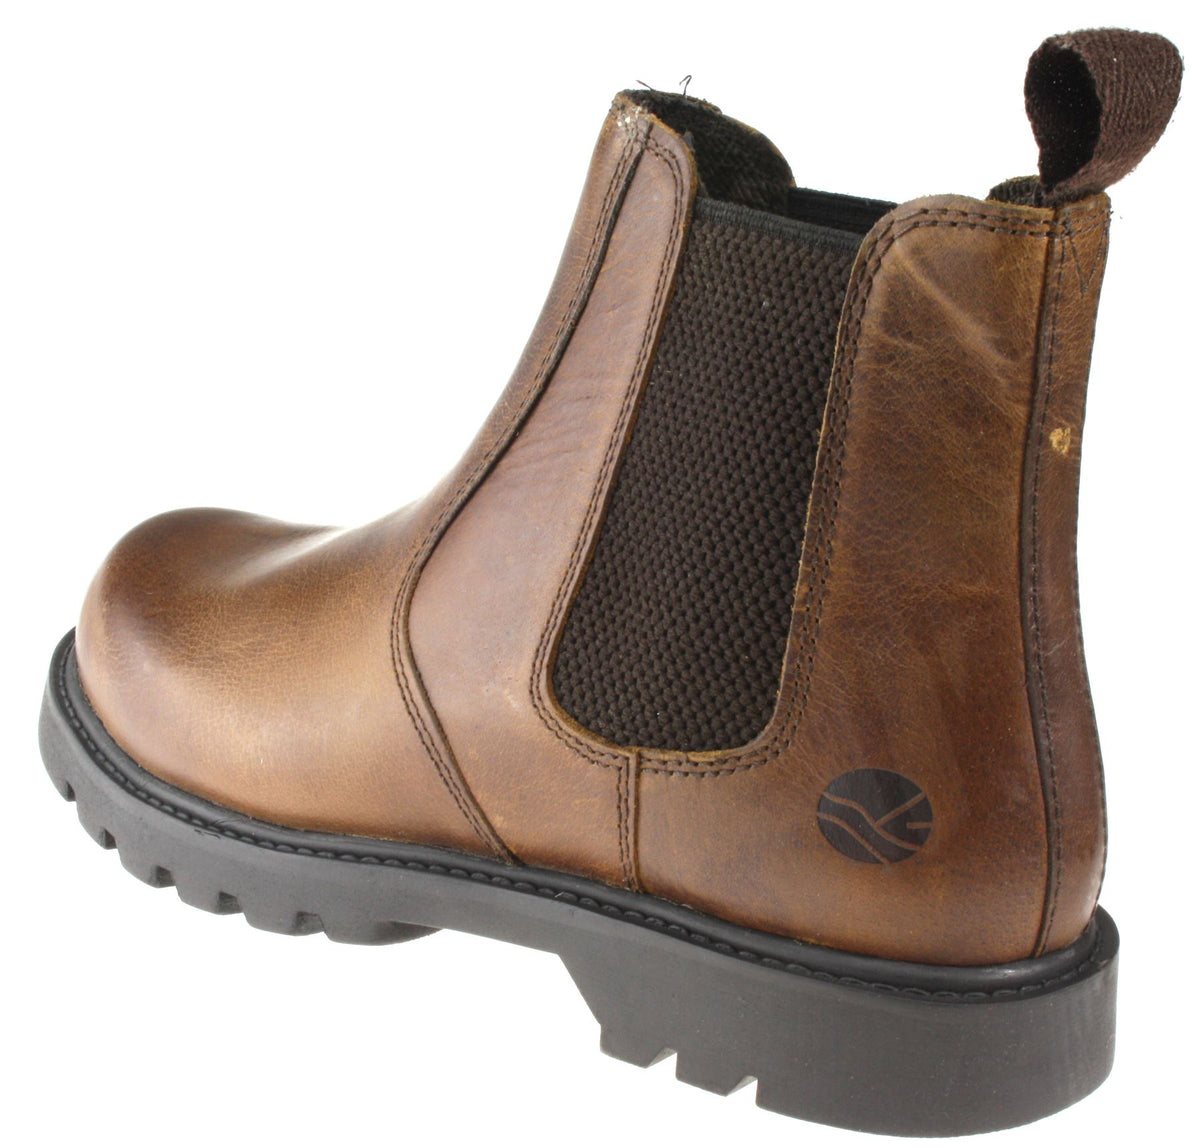 Oaktrak Men's Rocksley Leather Chelsea Dealer Boots